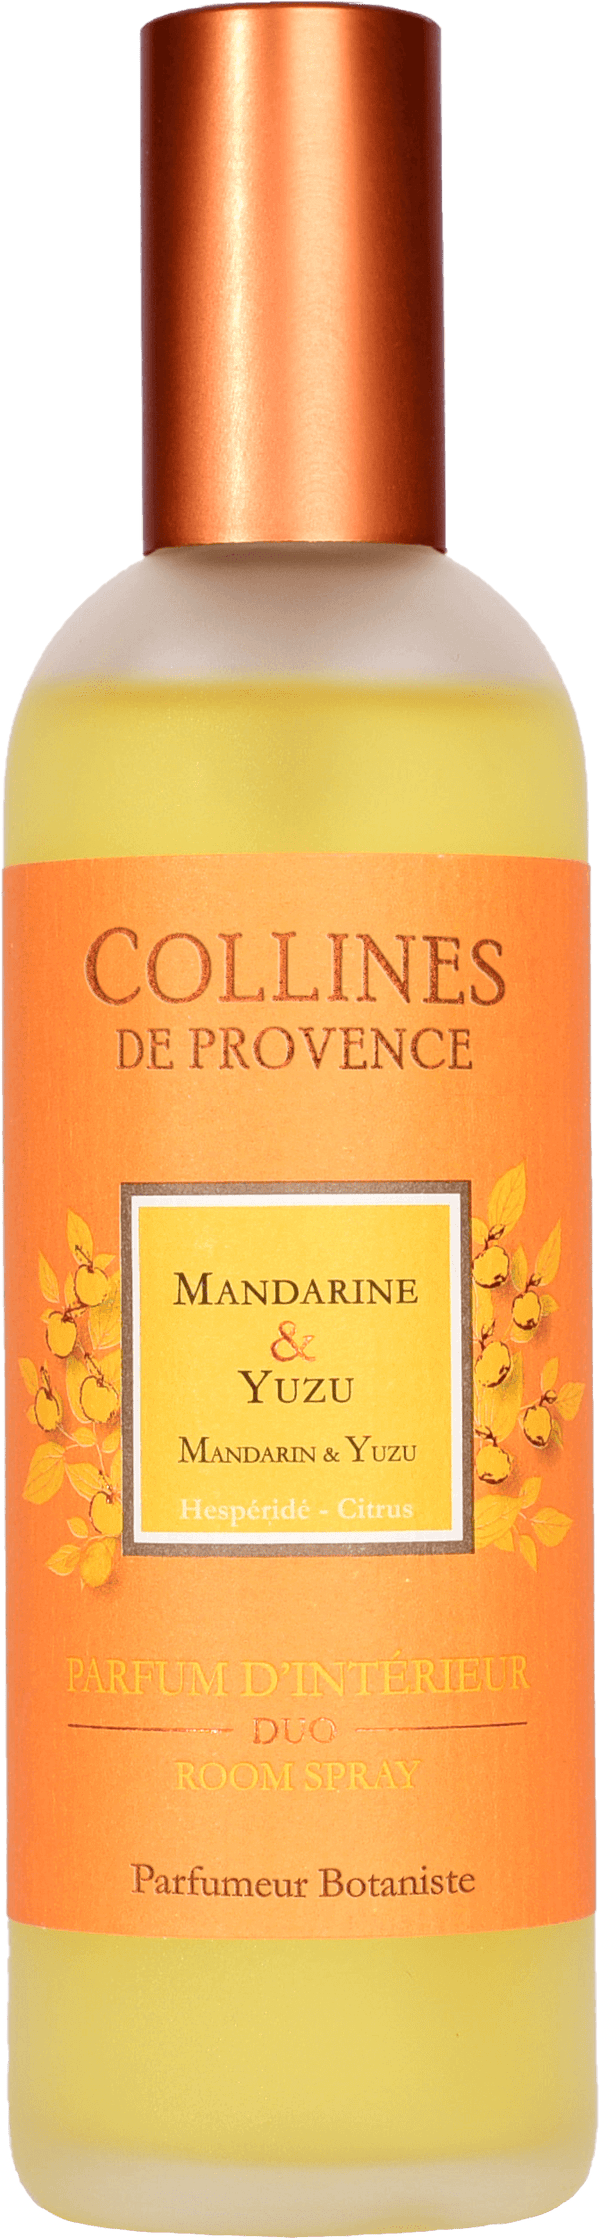 Raumspray Mandarine & Yuzu 100 ml - Collines de Provence